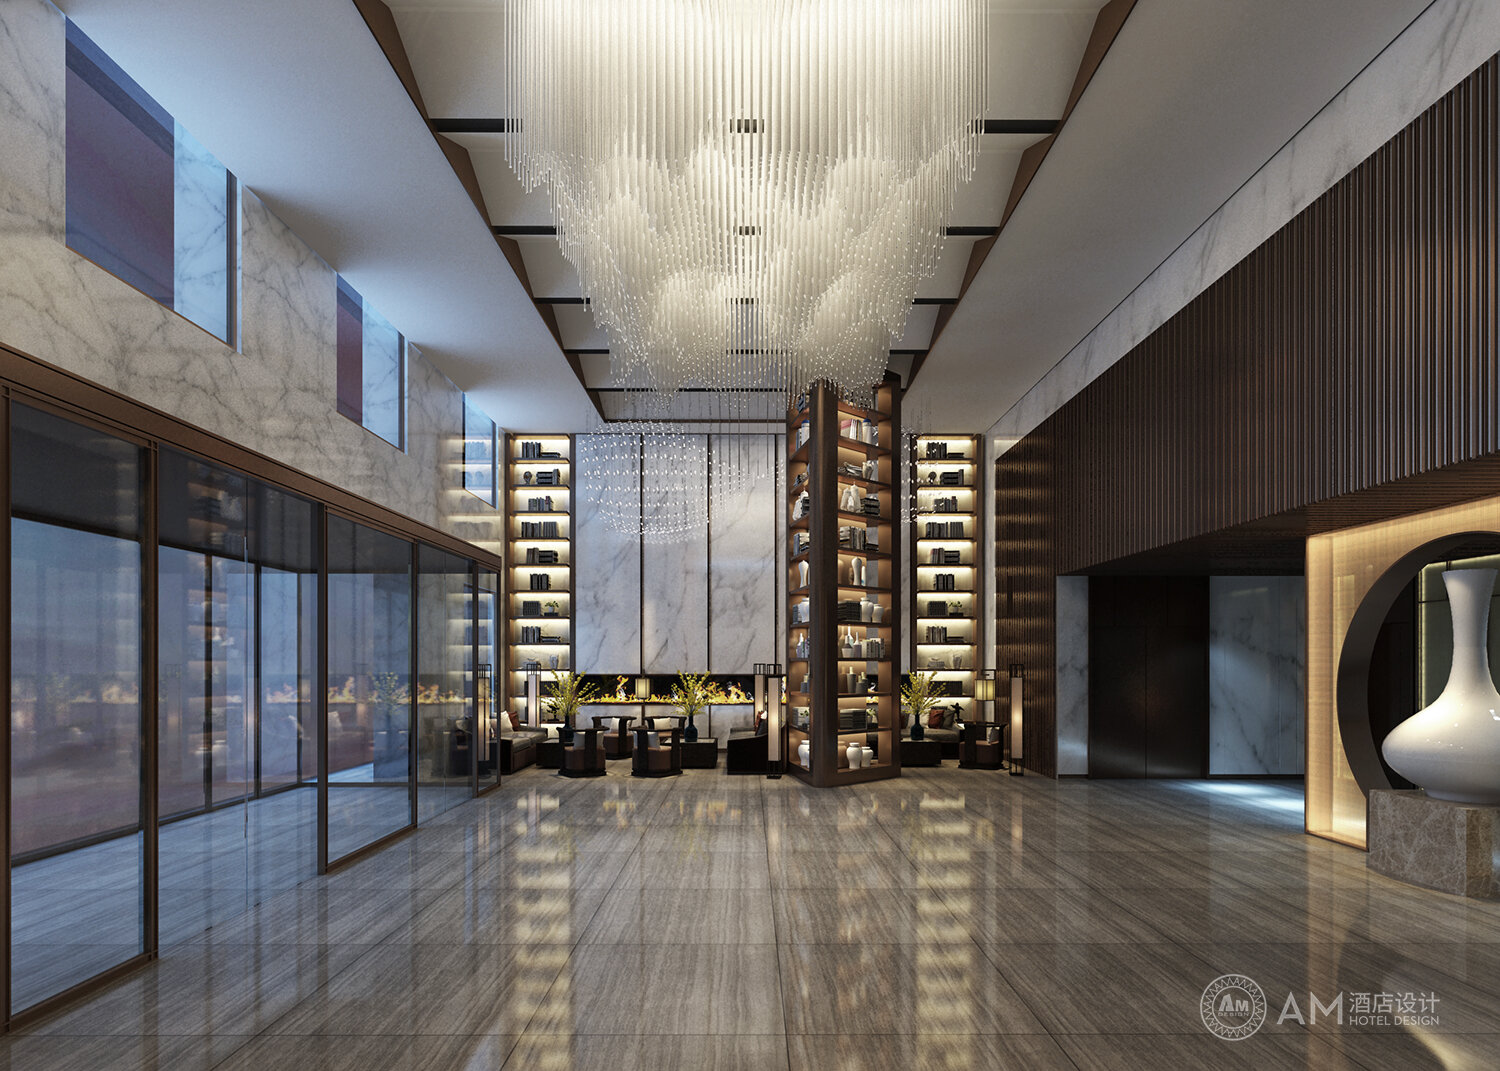 AM DESIGN | Lobby design of wandun hotel in Daqing